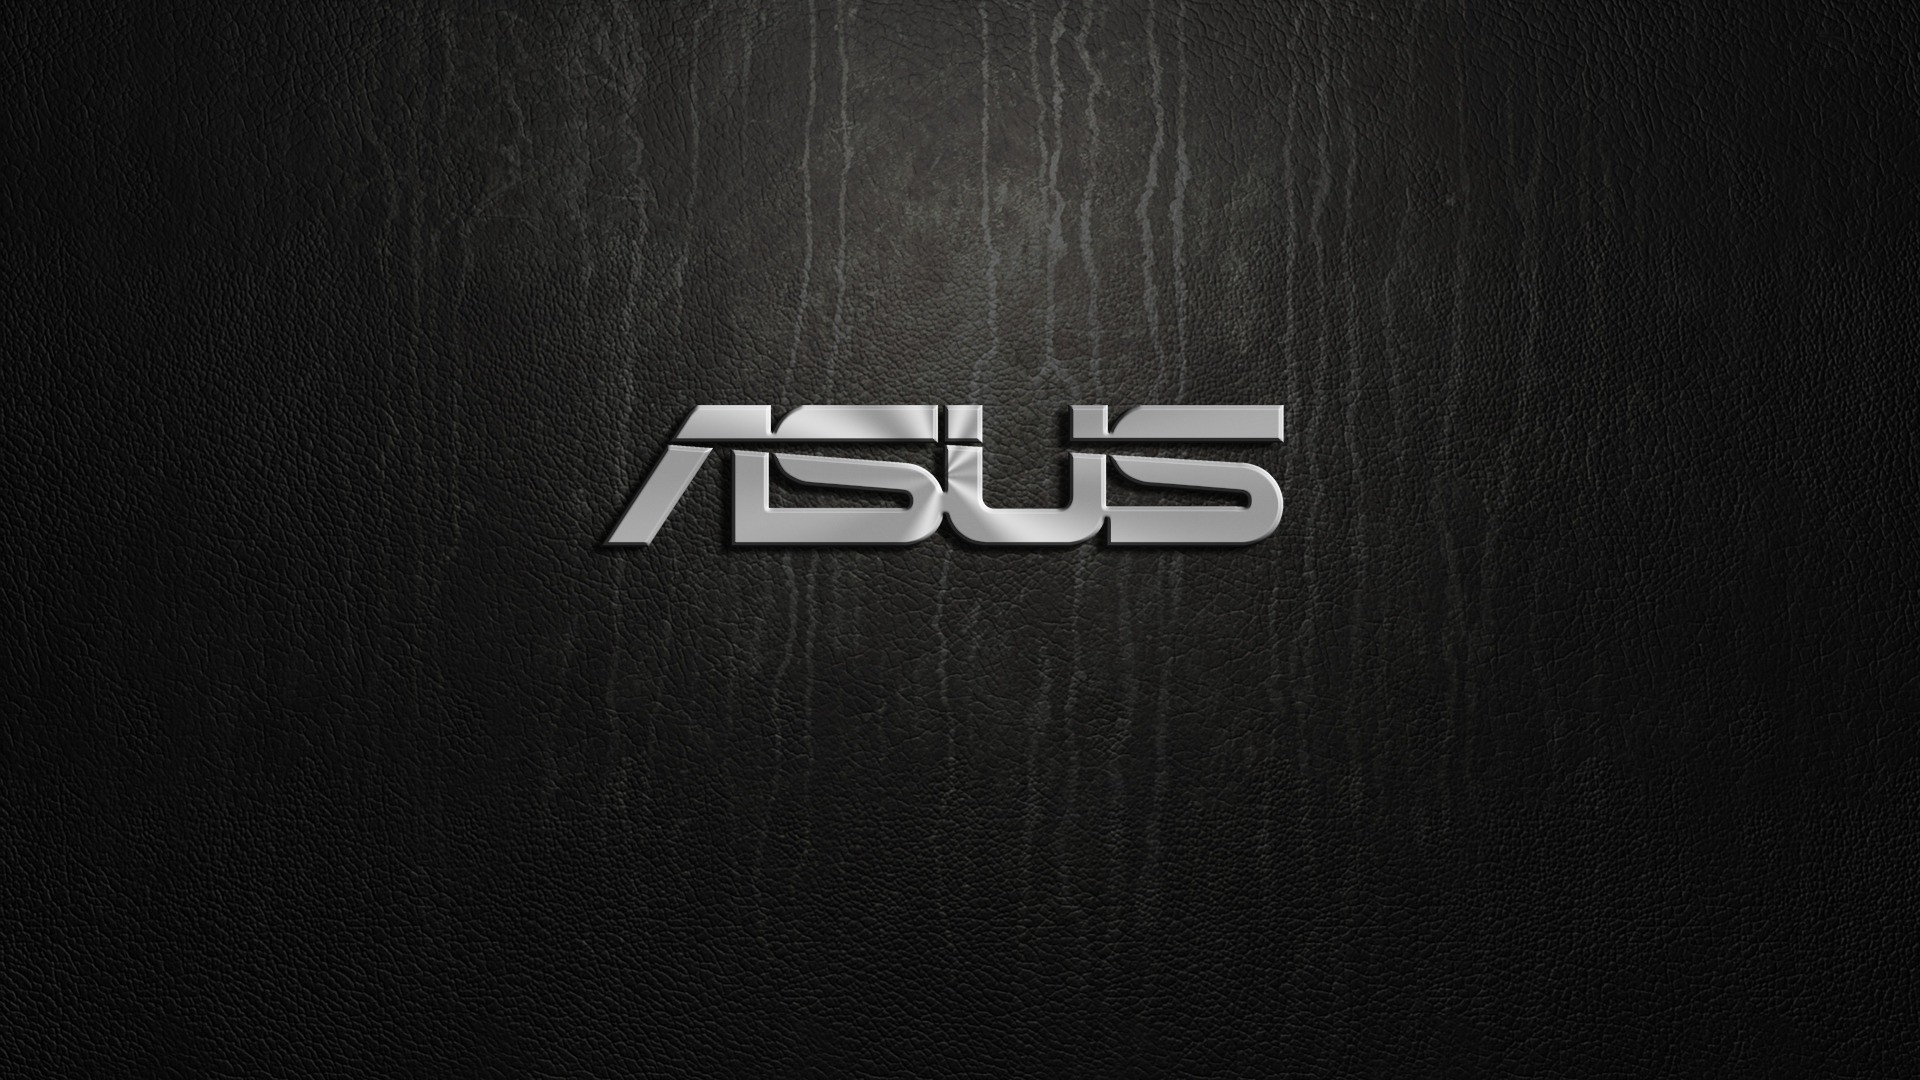 Asus silver logo on black background   HD wallpaper